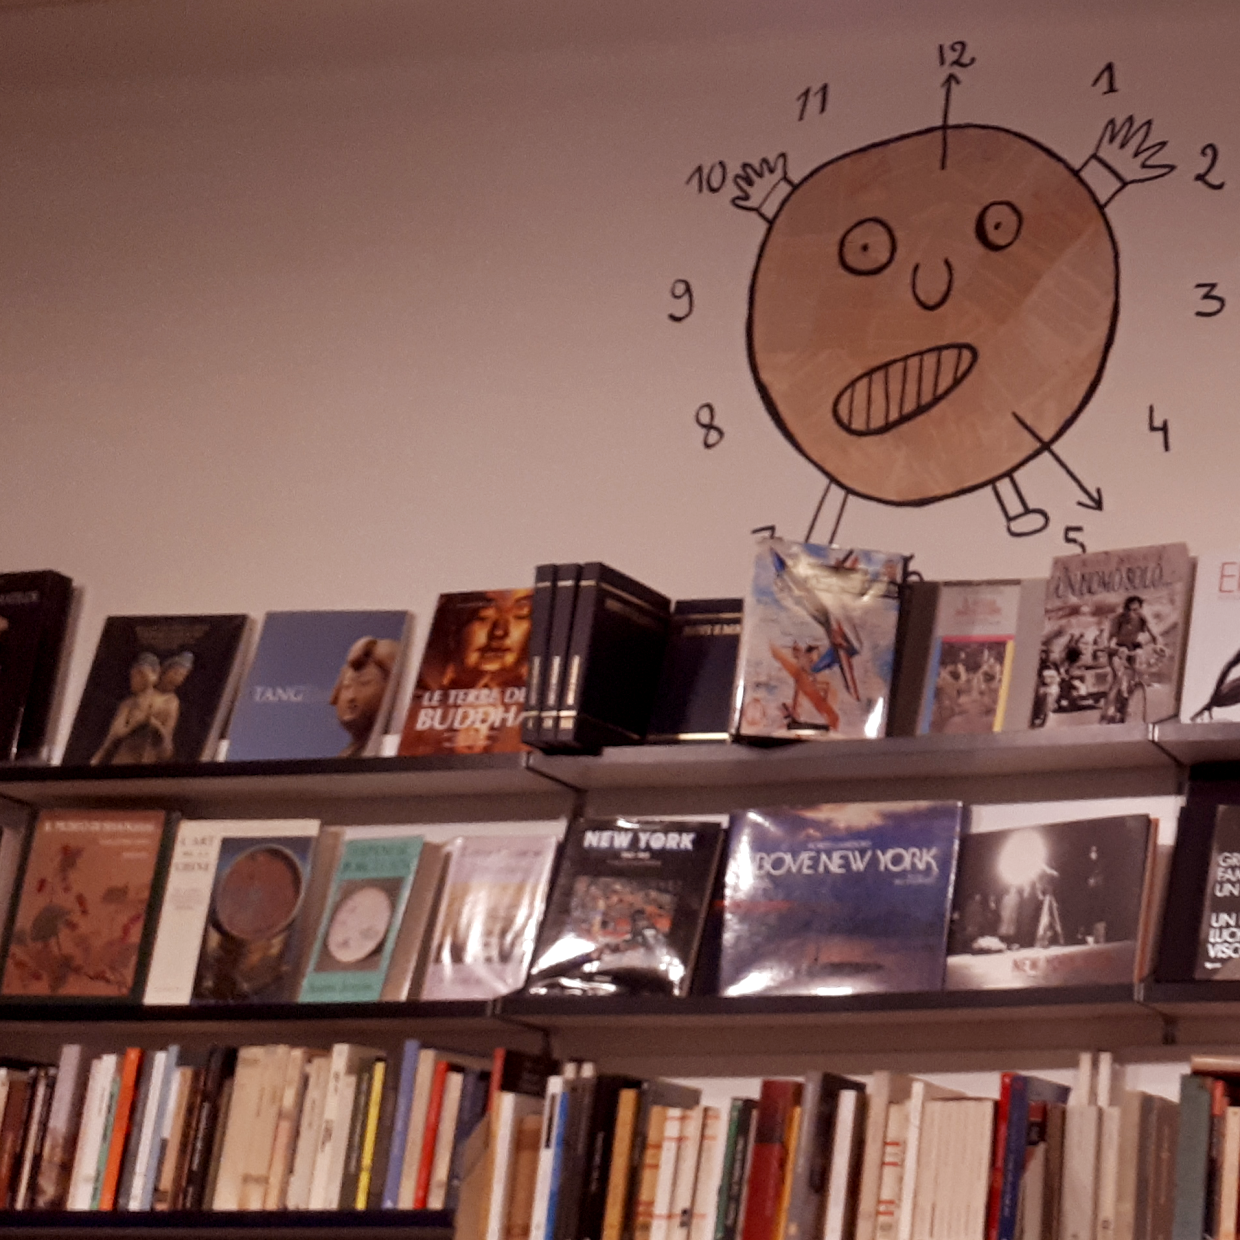 Libreria Zivago